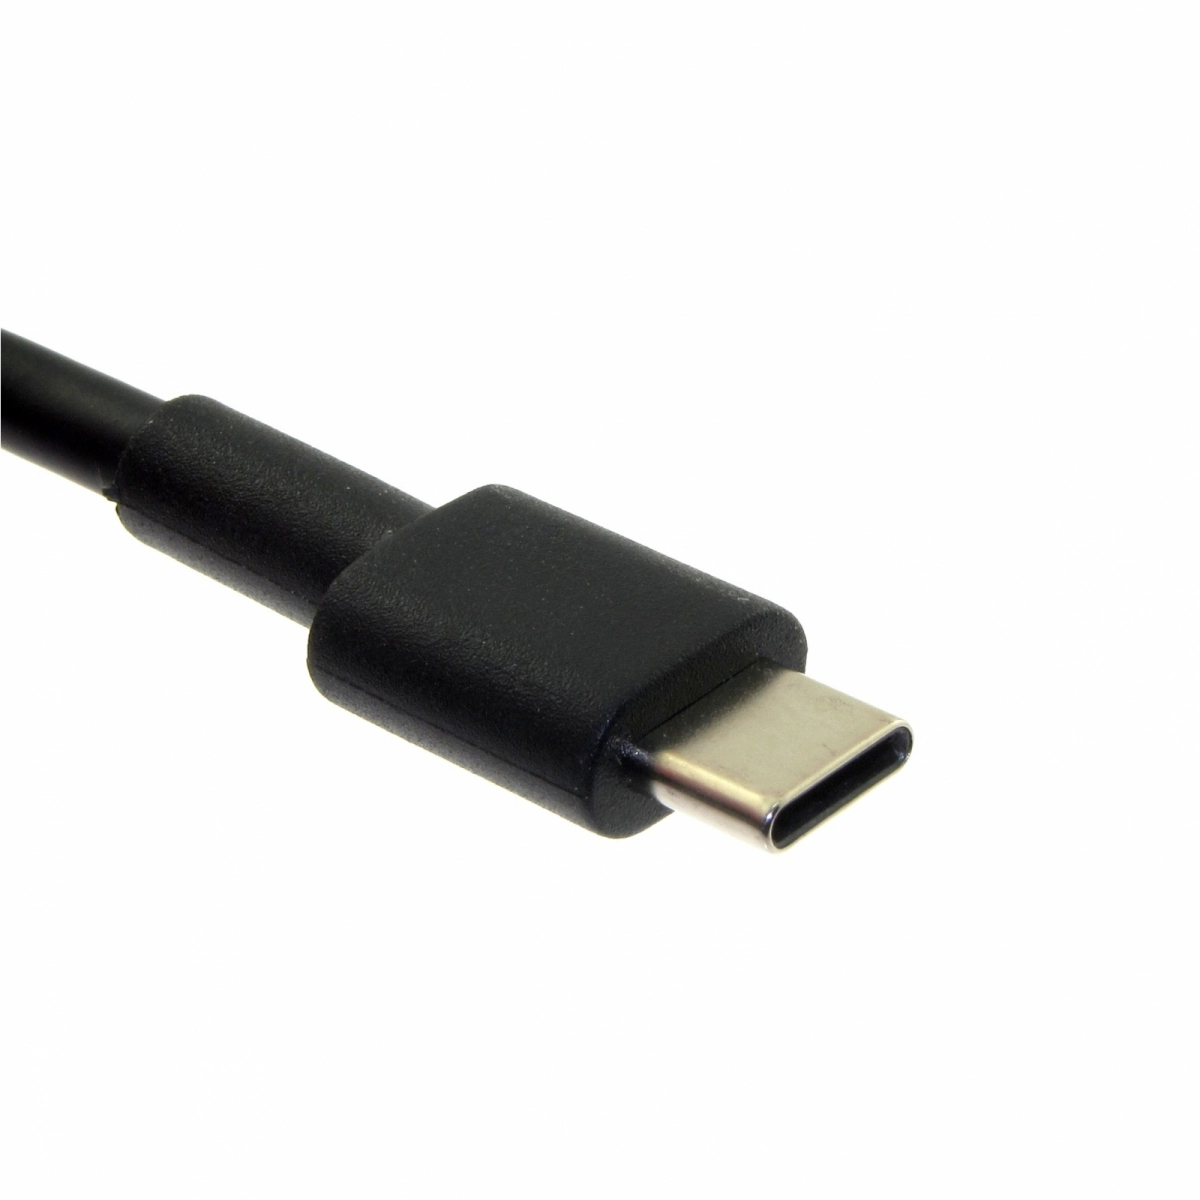 Original Netzteil für ASUS 0A001-01290200, 20V, 4.5A, Stecker USB-C, 90W